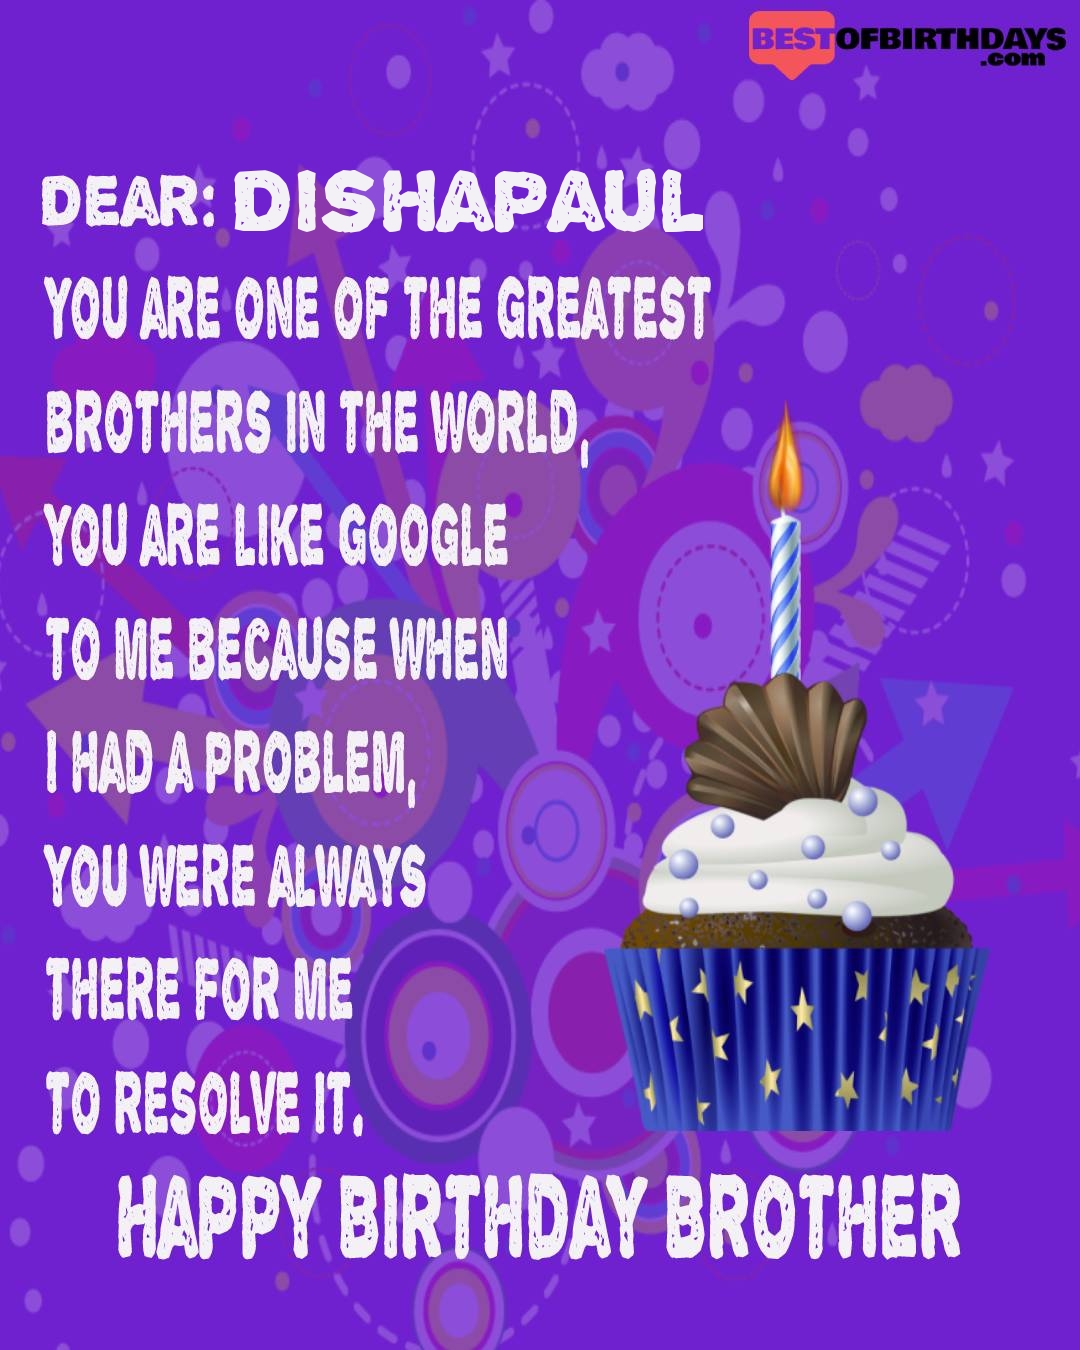 Happy birthday dishapaul bhai brother bro